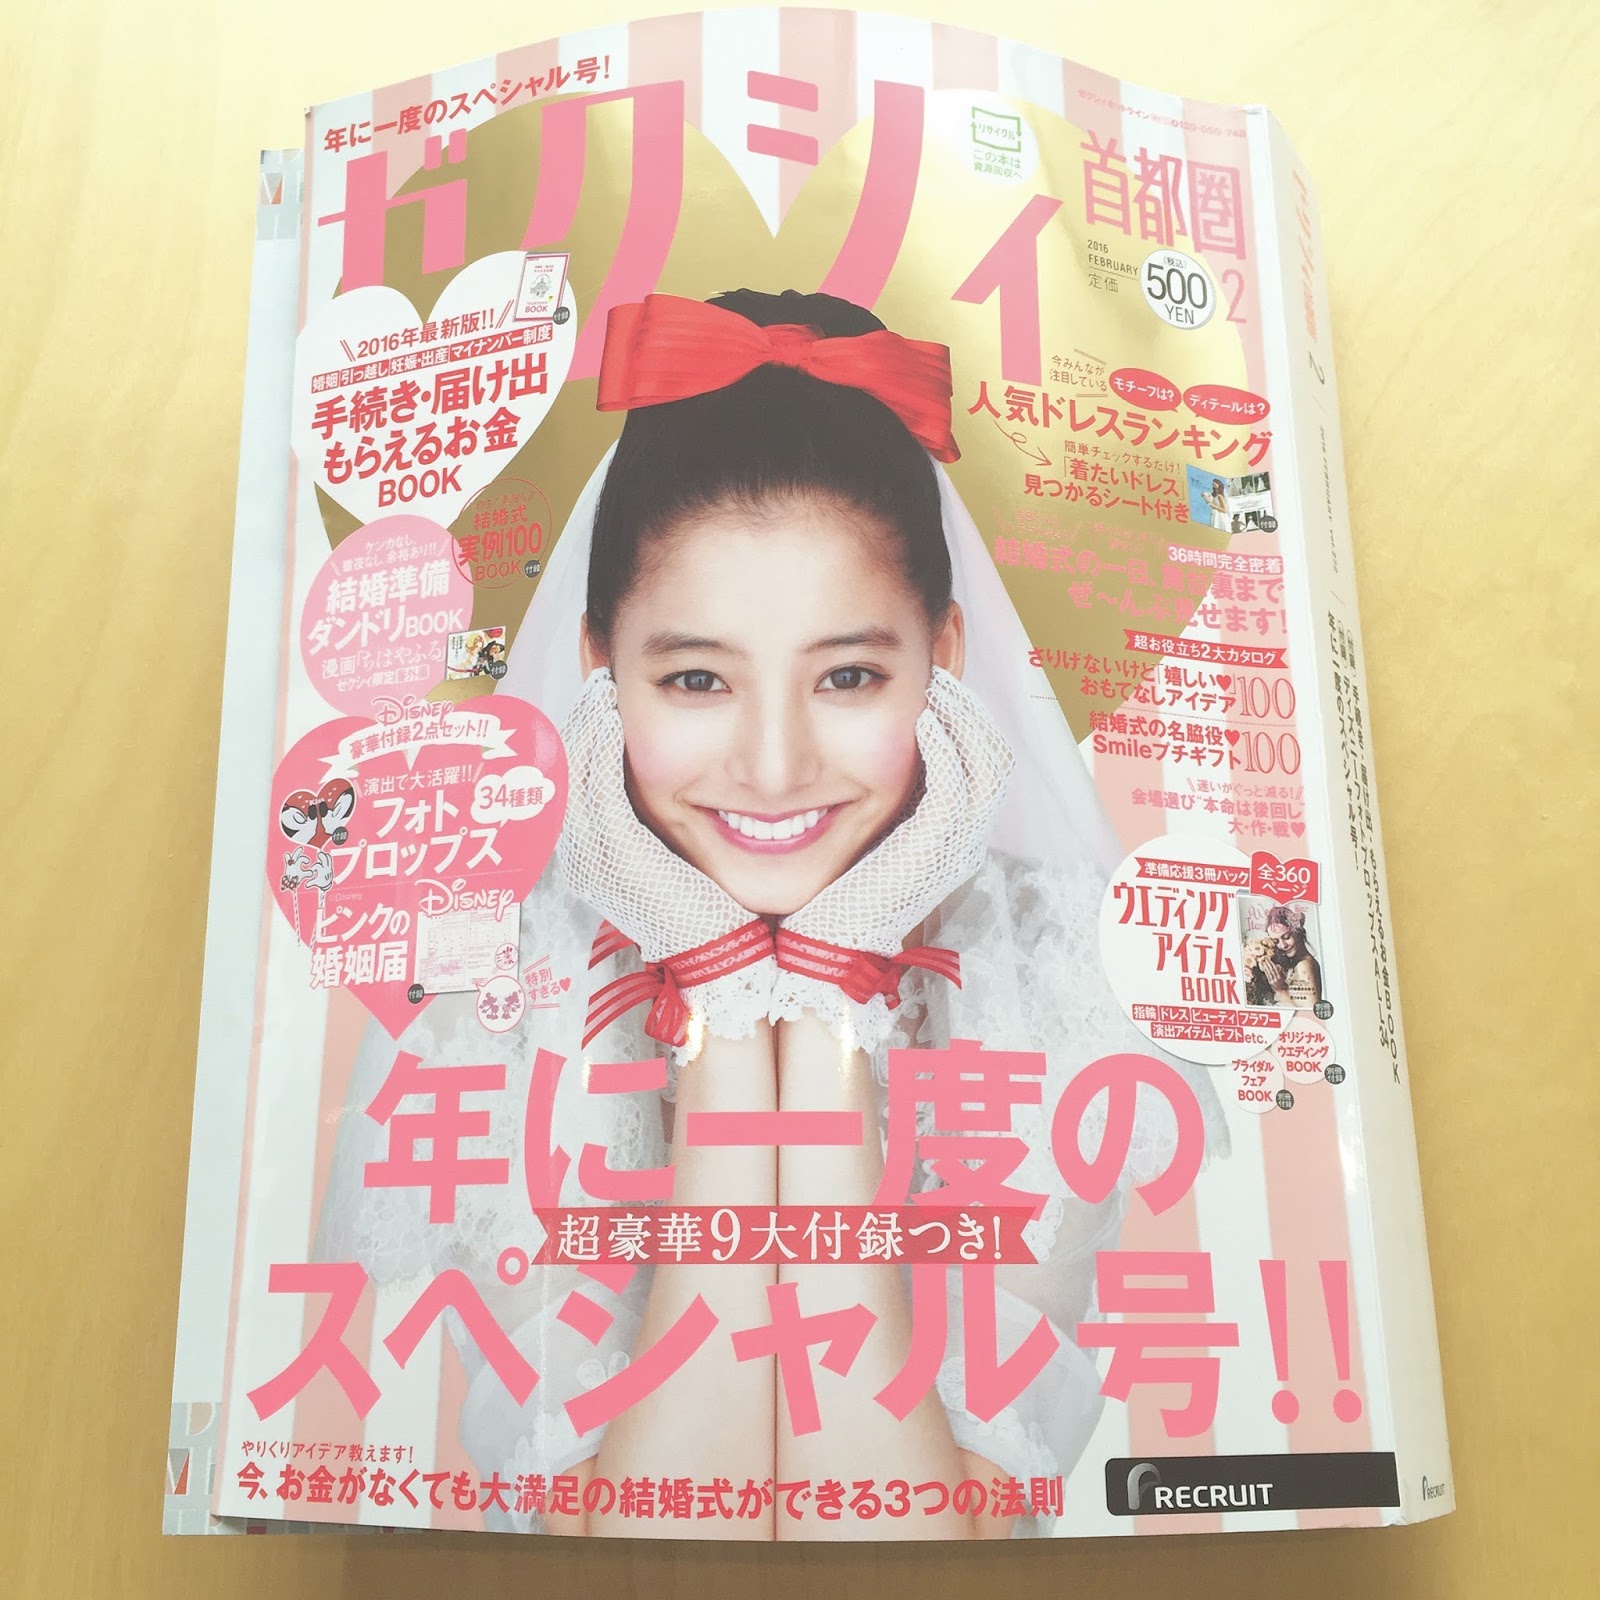 Atelier Nae Journal 雑誌掲載 ゼクシィ2月号 ゼクシィ海外ウエディング 16 Spring Summer 12 23 発売